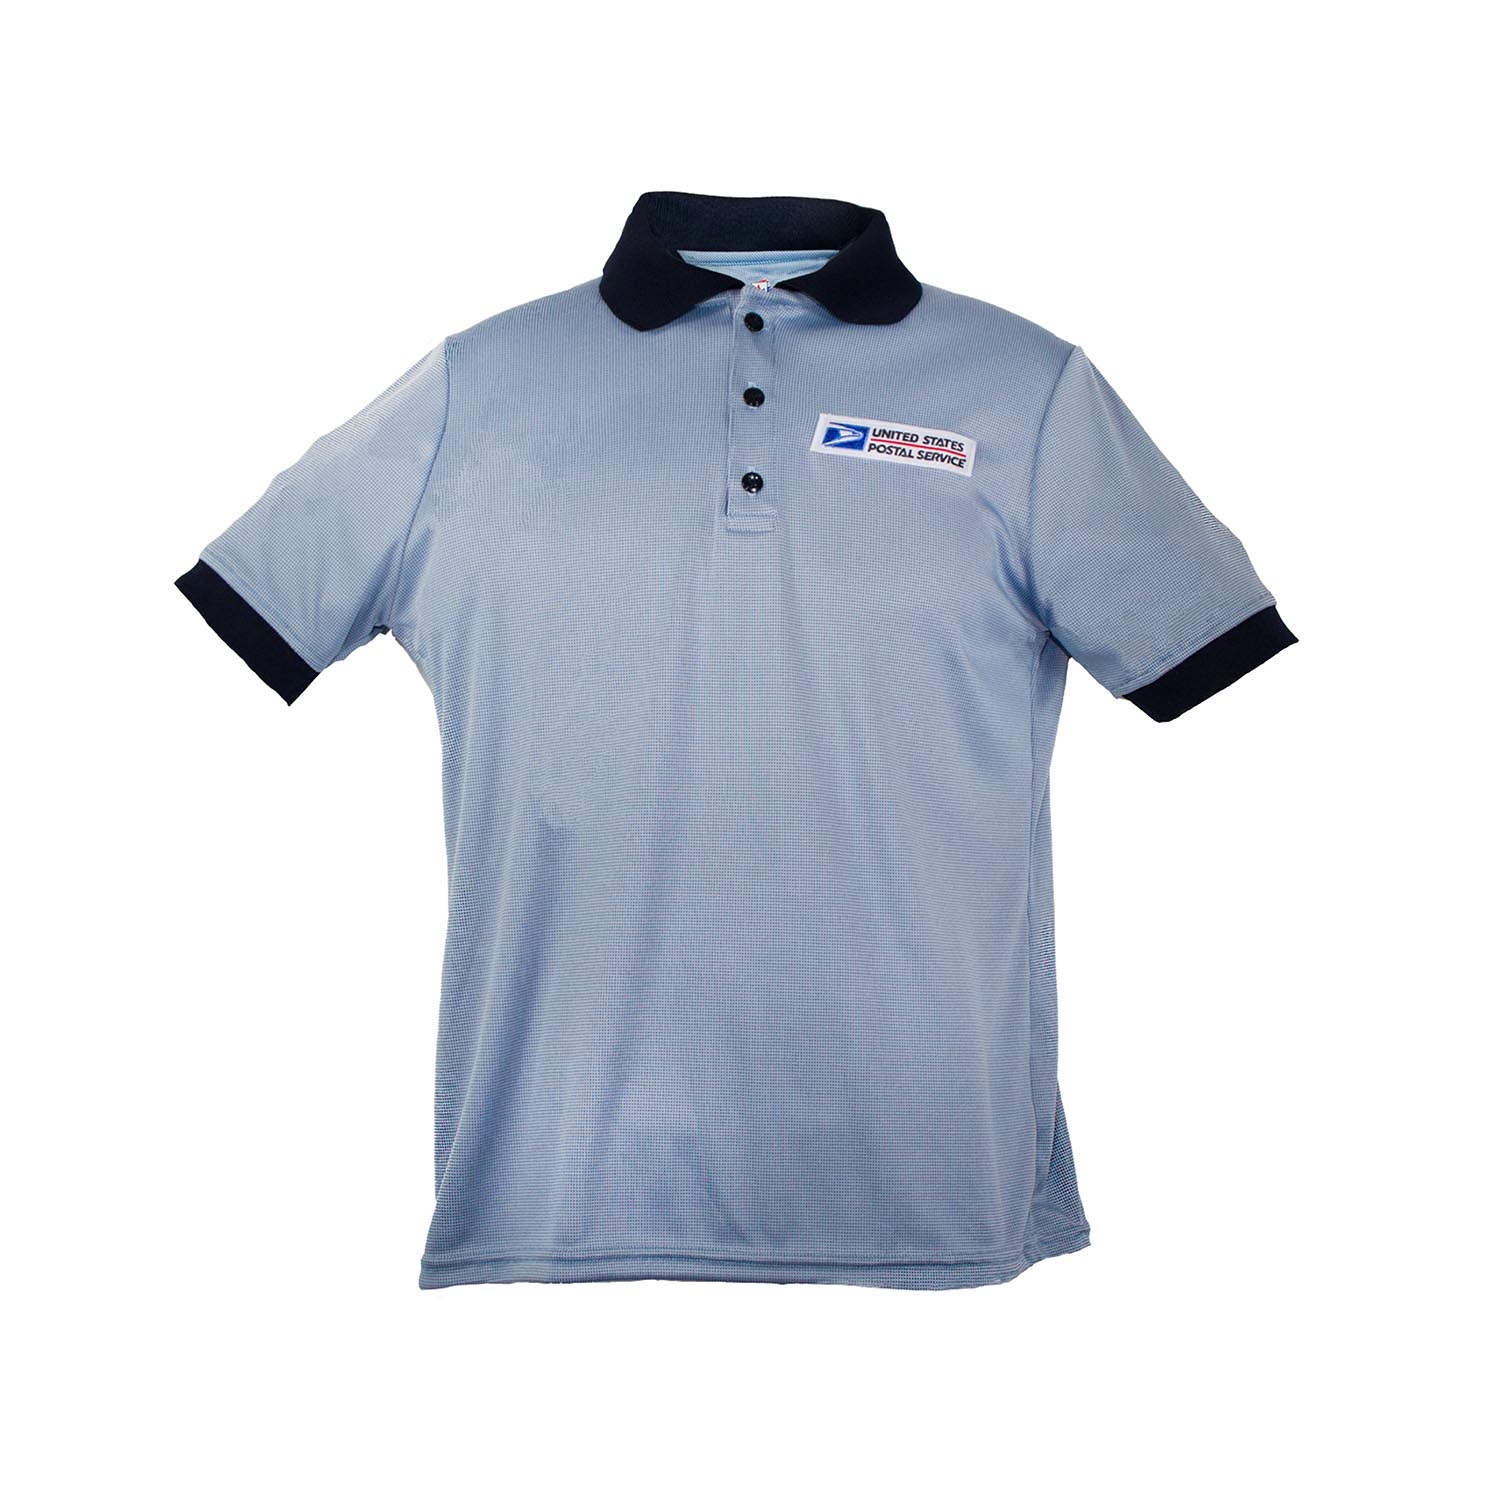 USPS Window Clerk Performance Polo Shirt